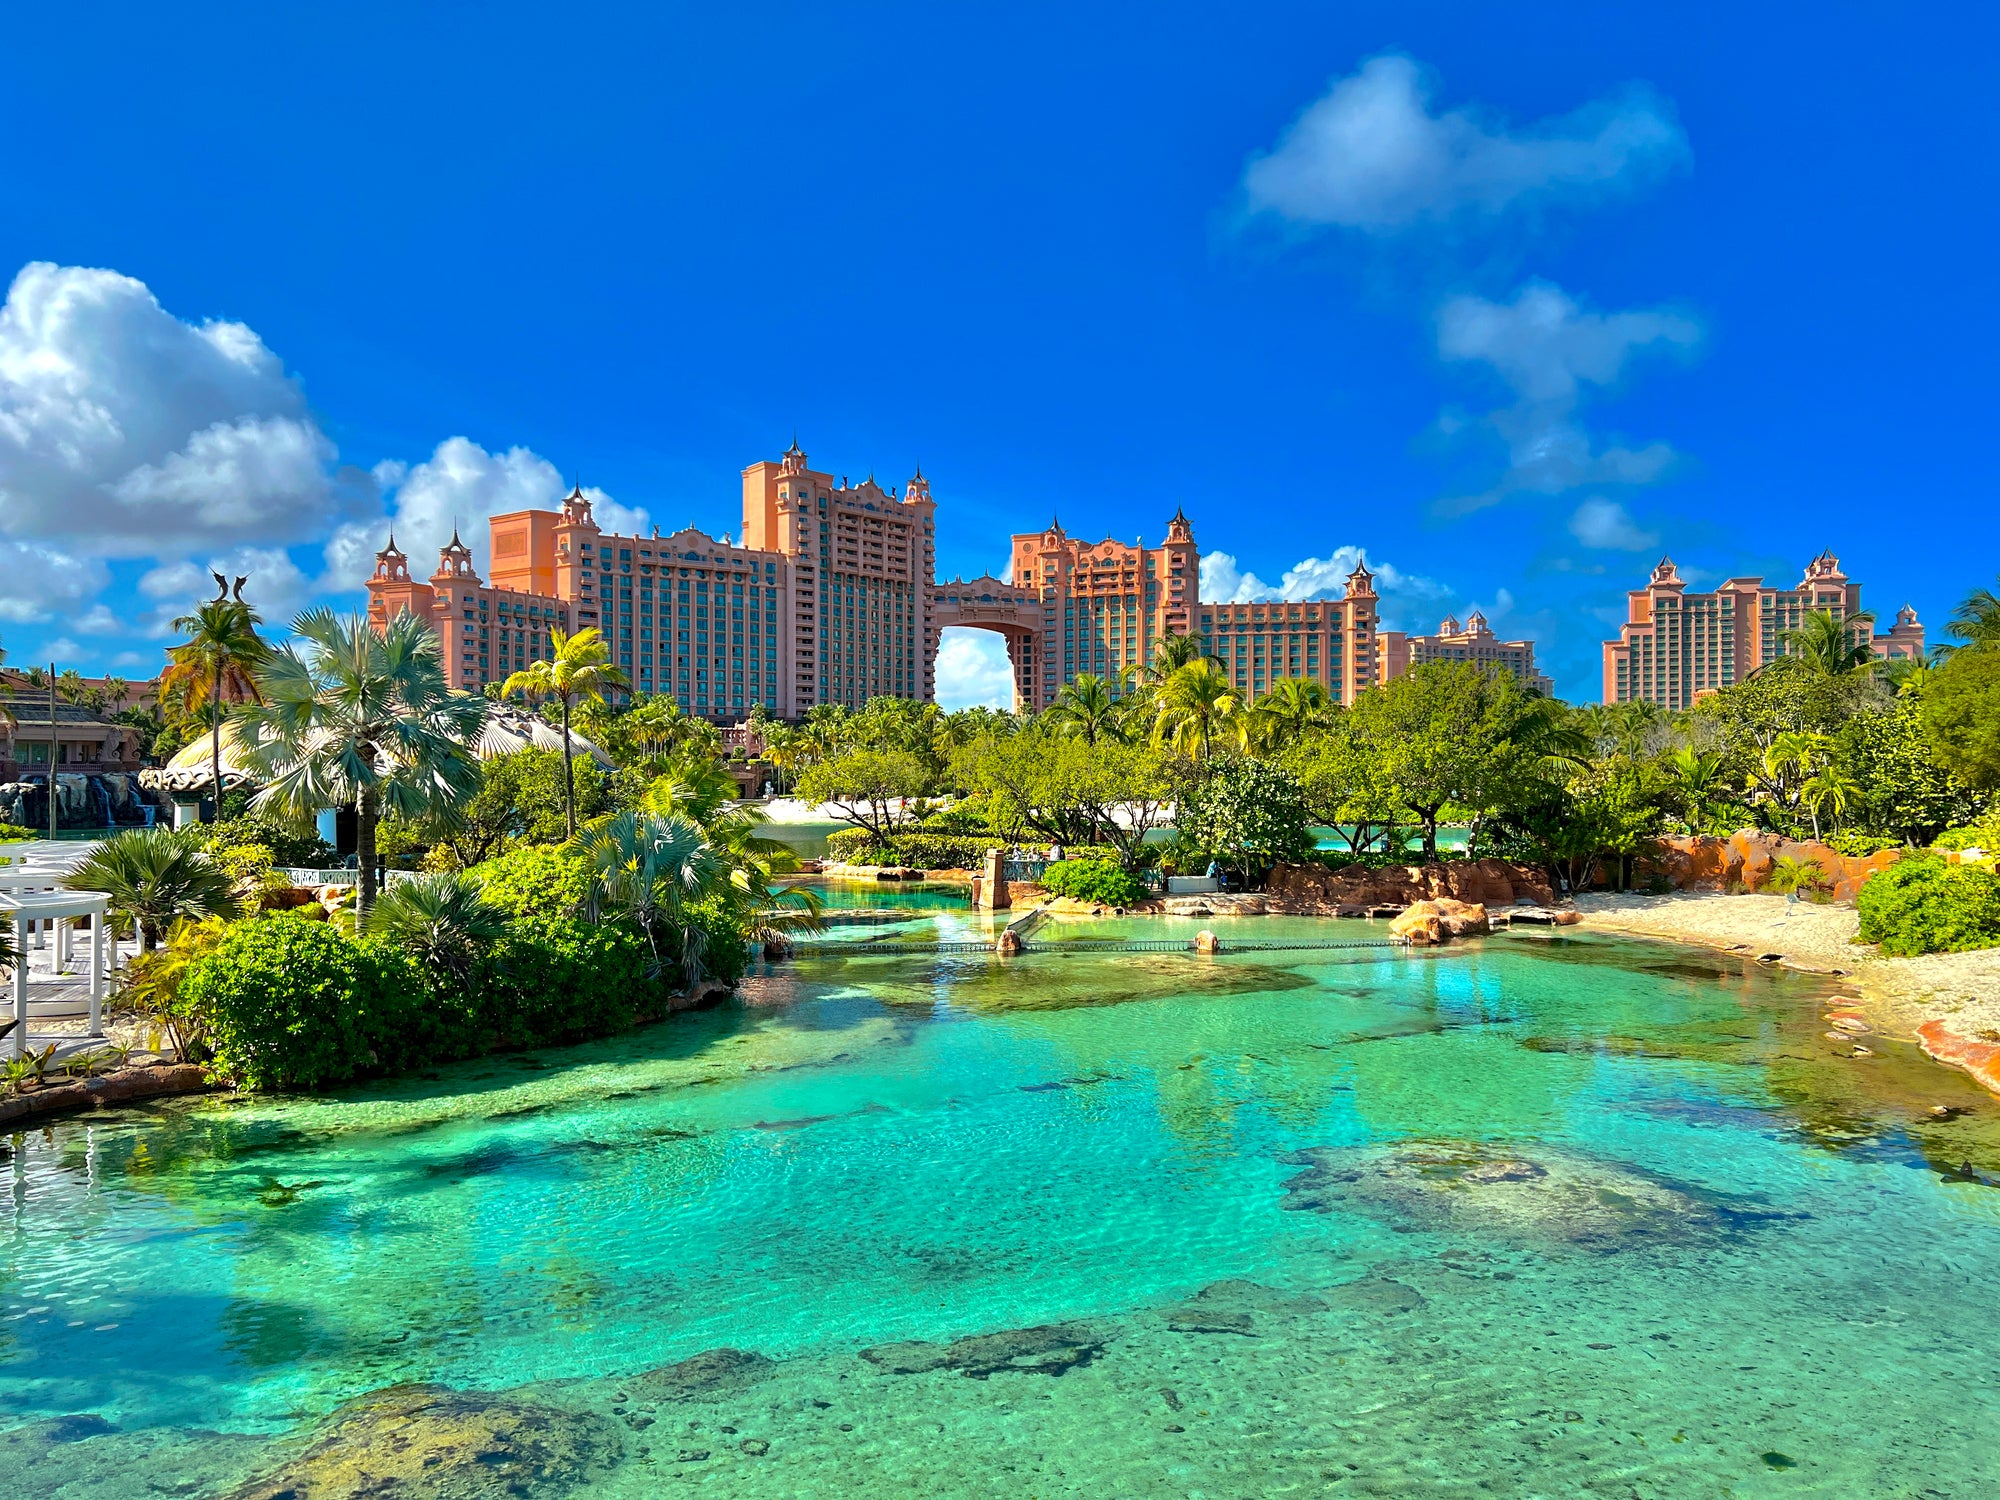 The scenic view of Atlantis hotel in Paradise Island, Nassau, Bahamas